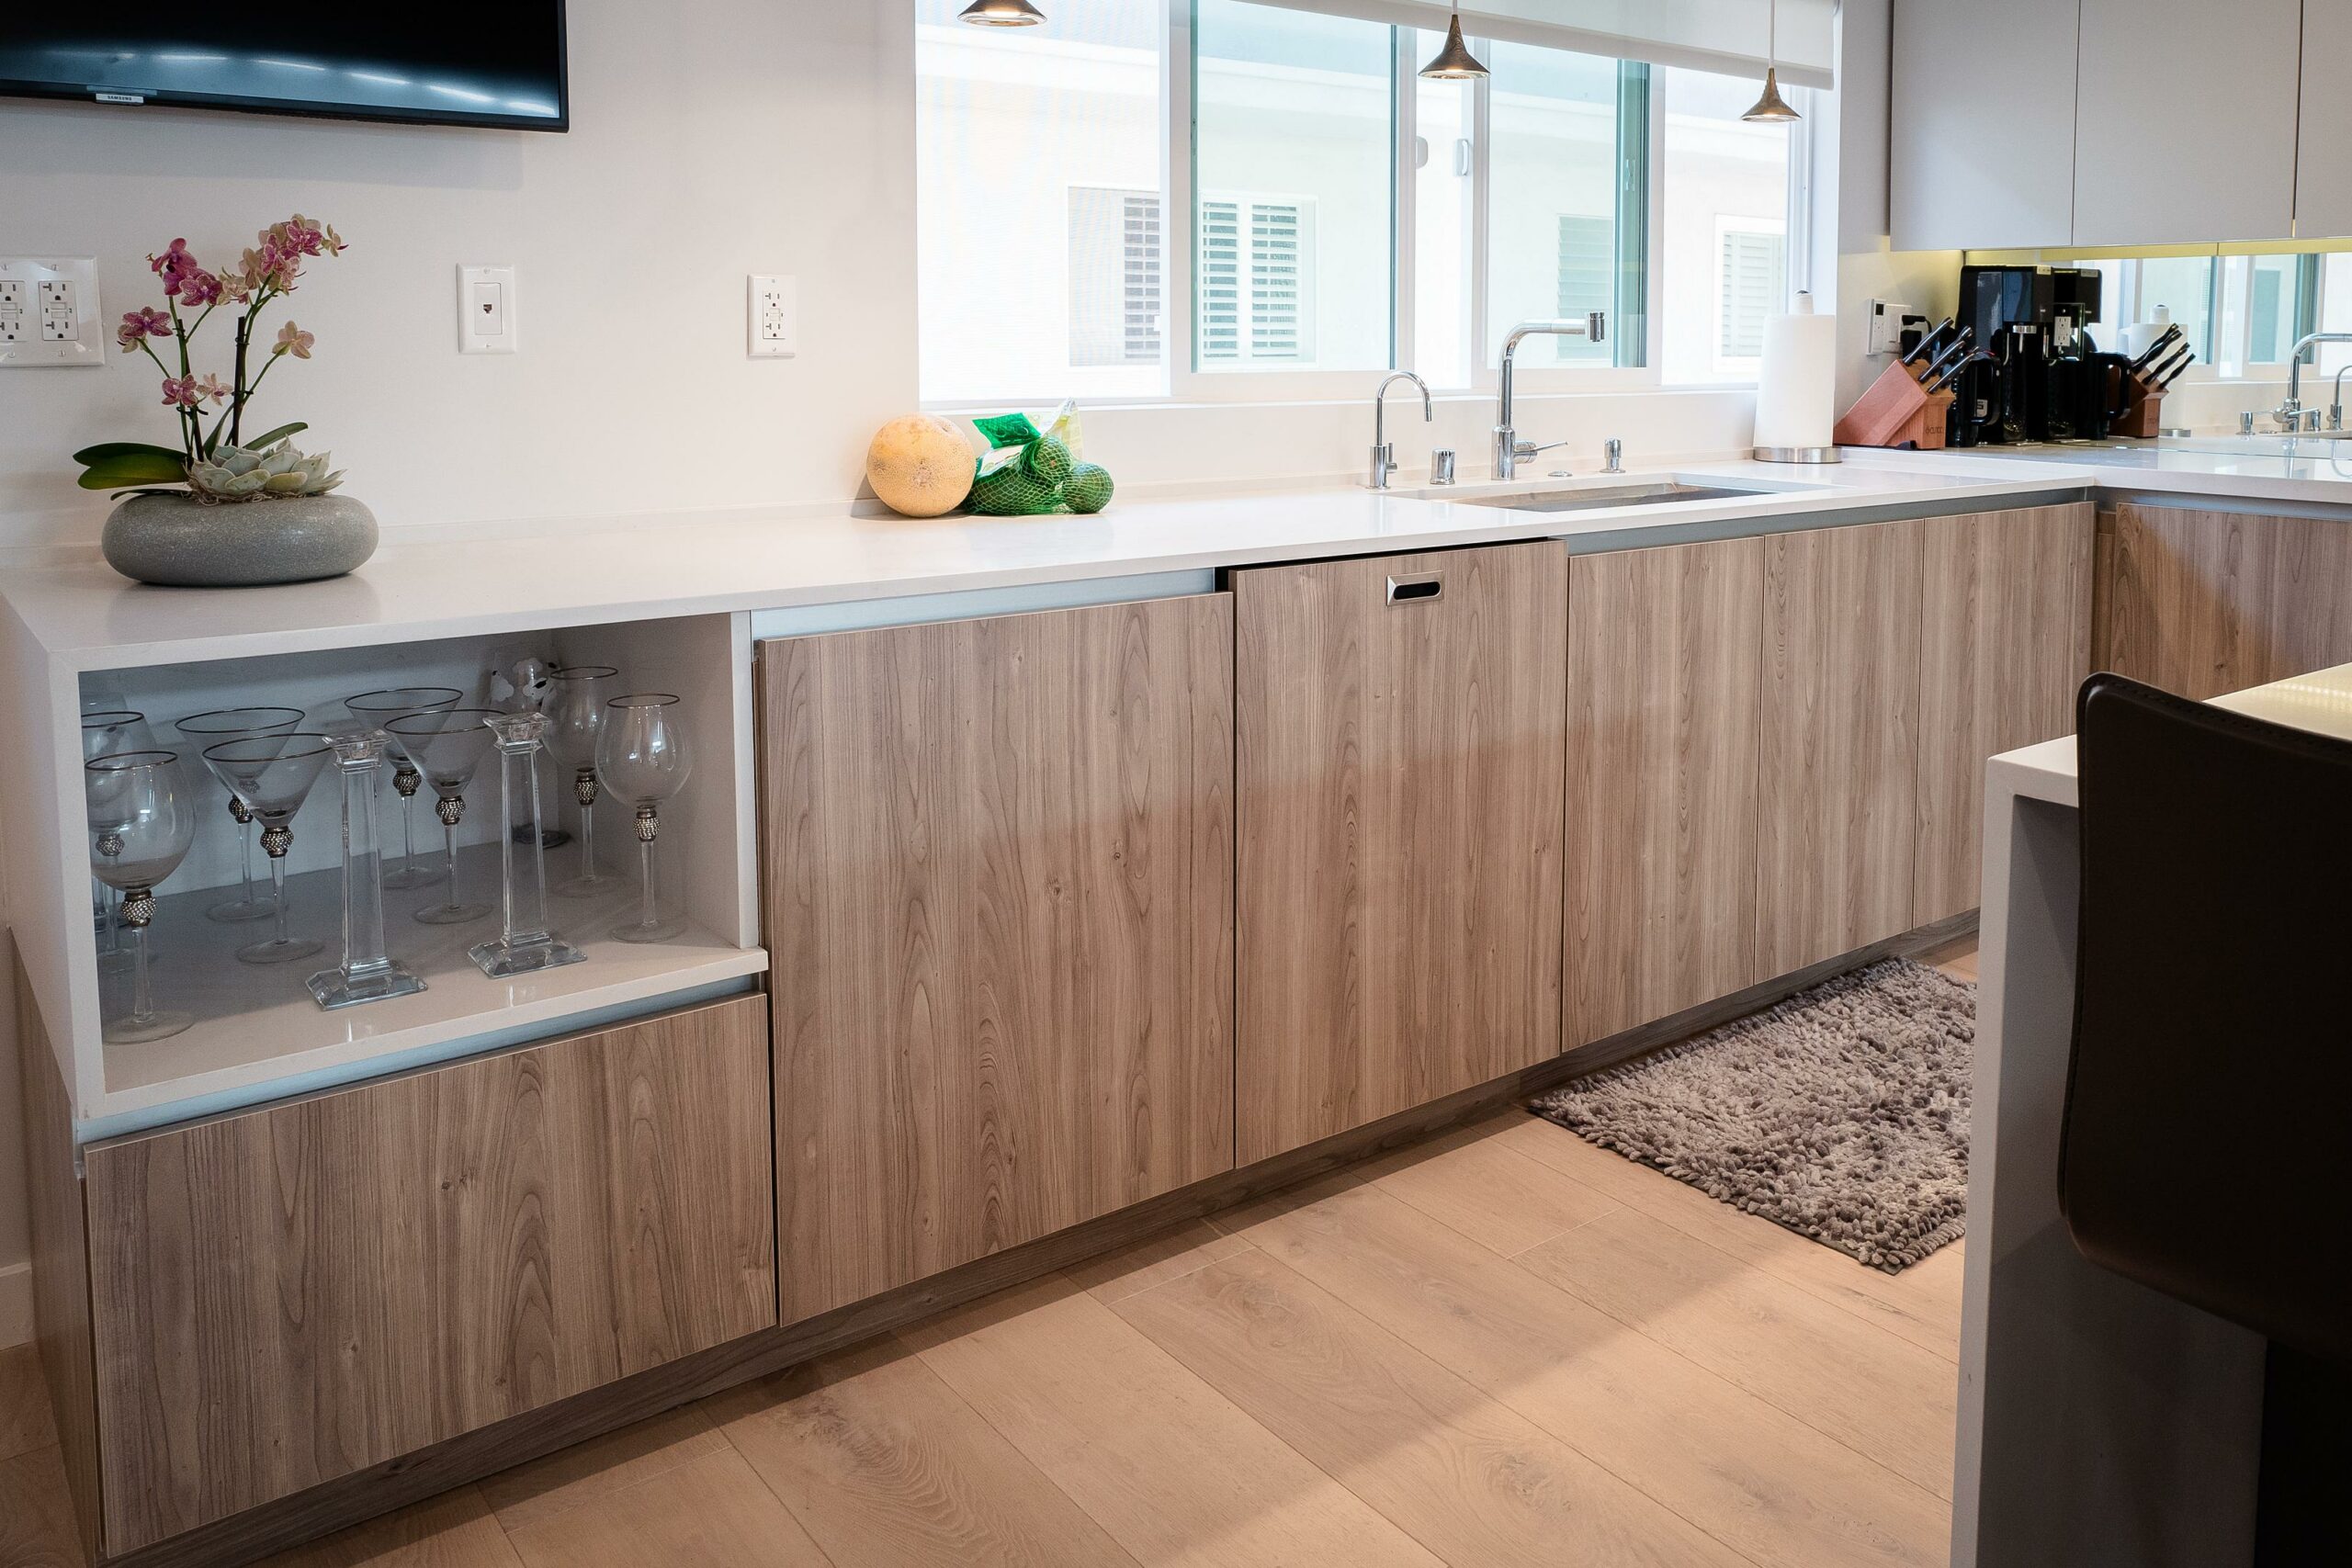 Modern kitchen interior design with wooden cabinetry.